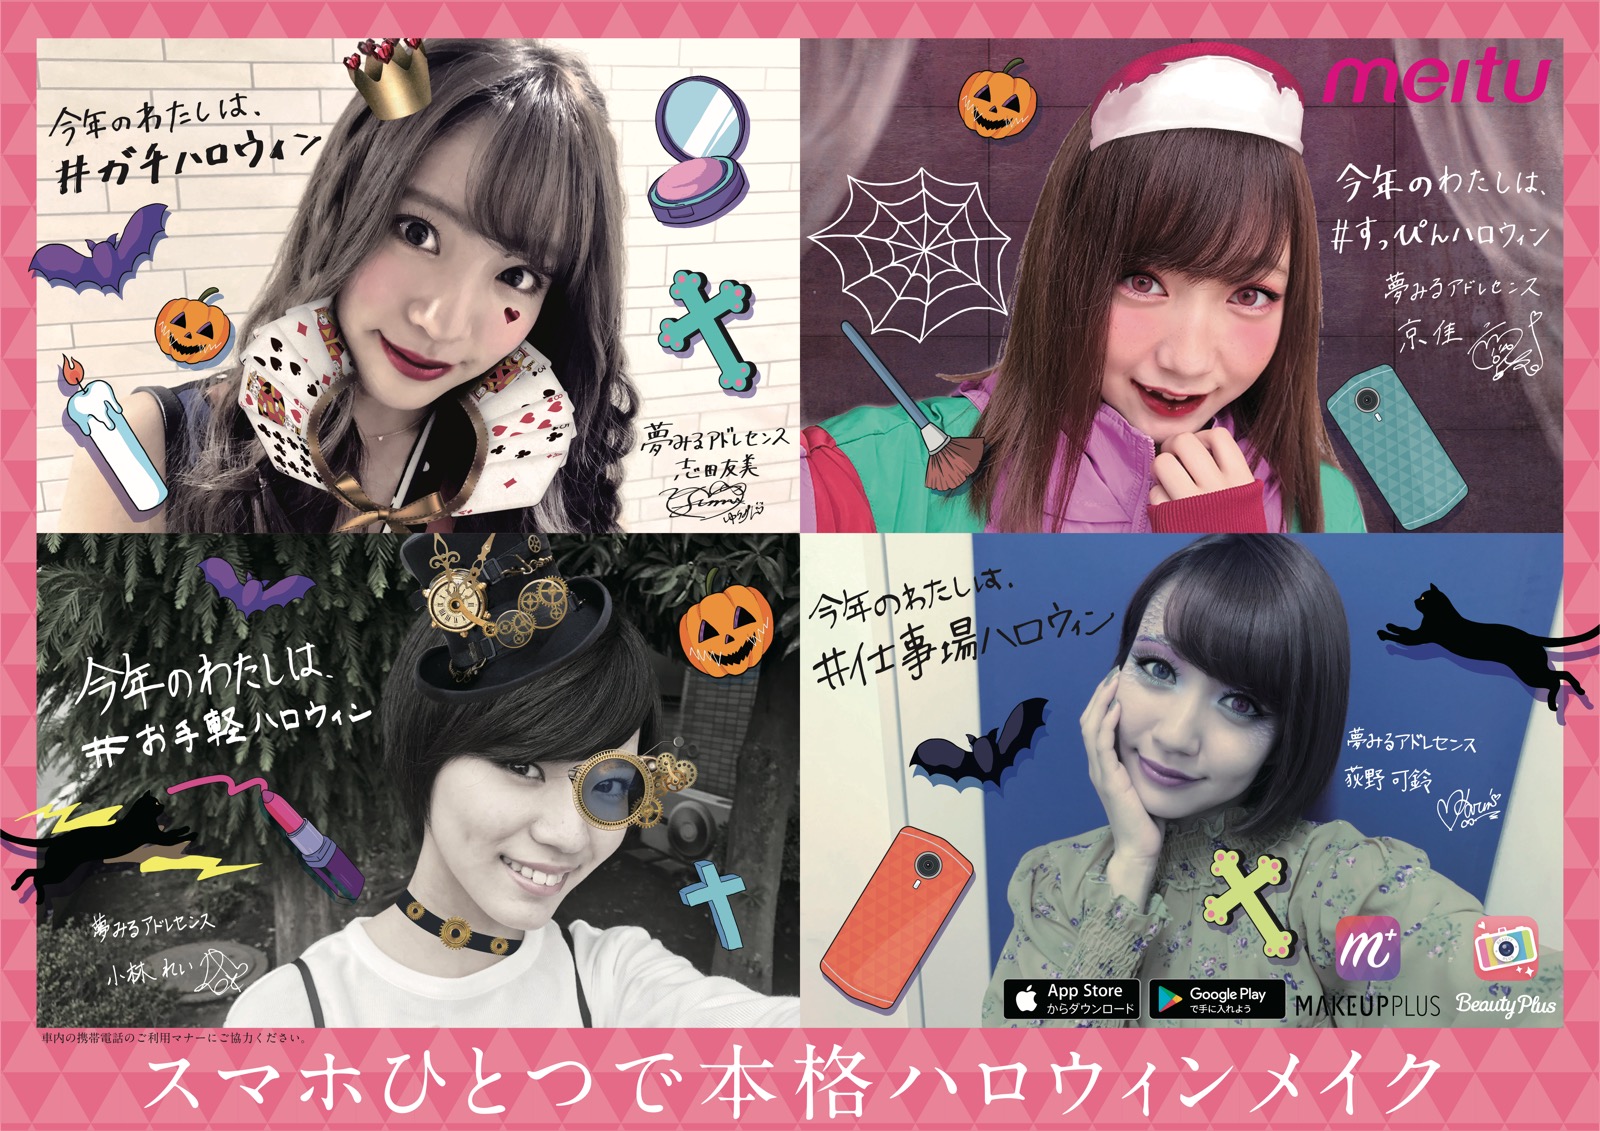 Yumemiru Adolescence Take Over Shibuya Station for Halloween!